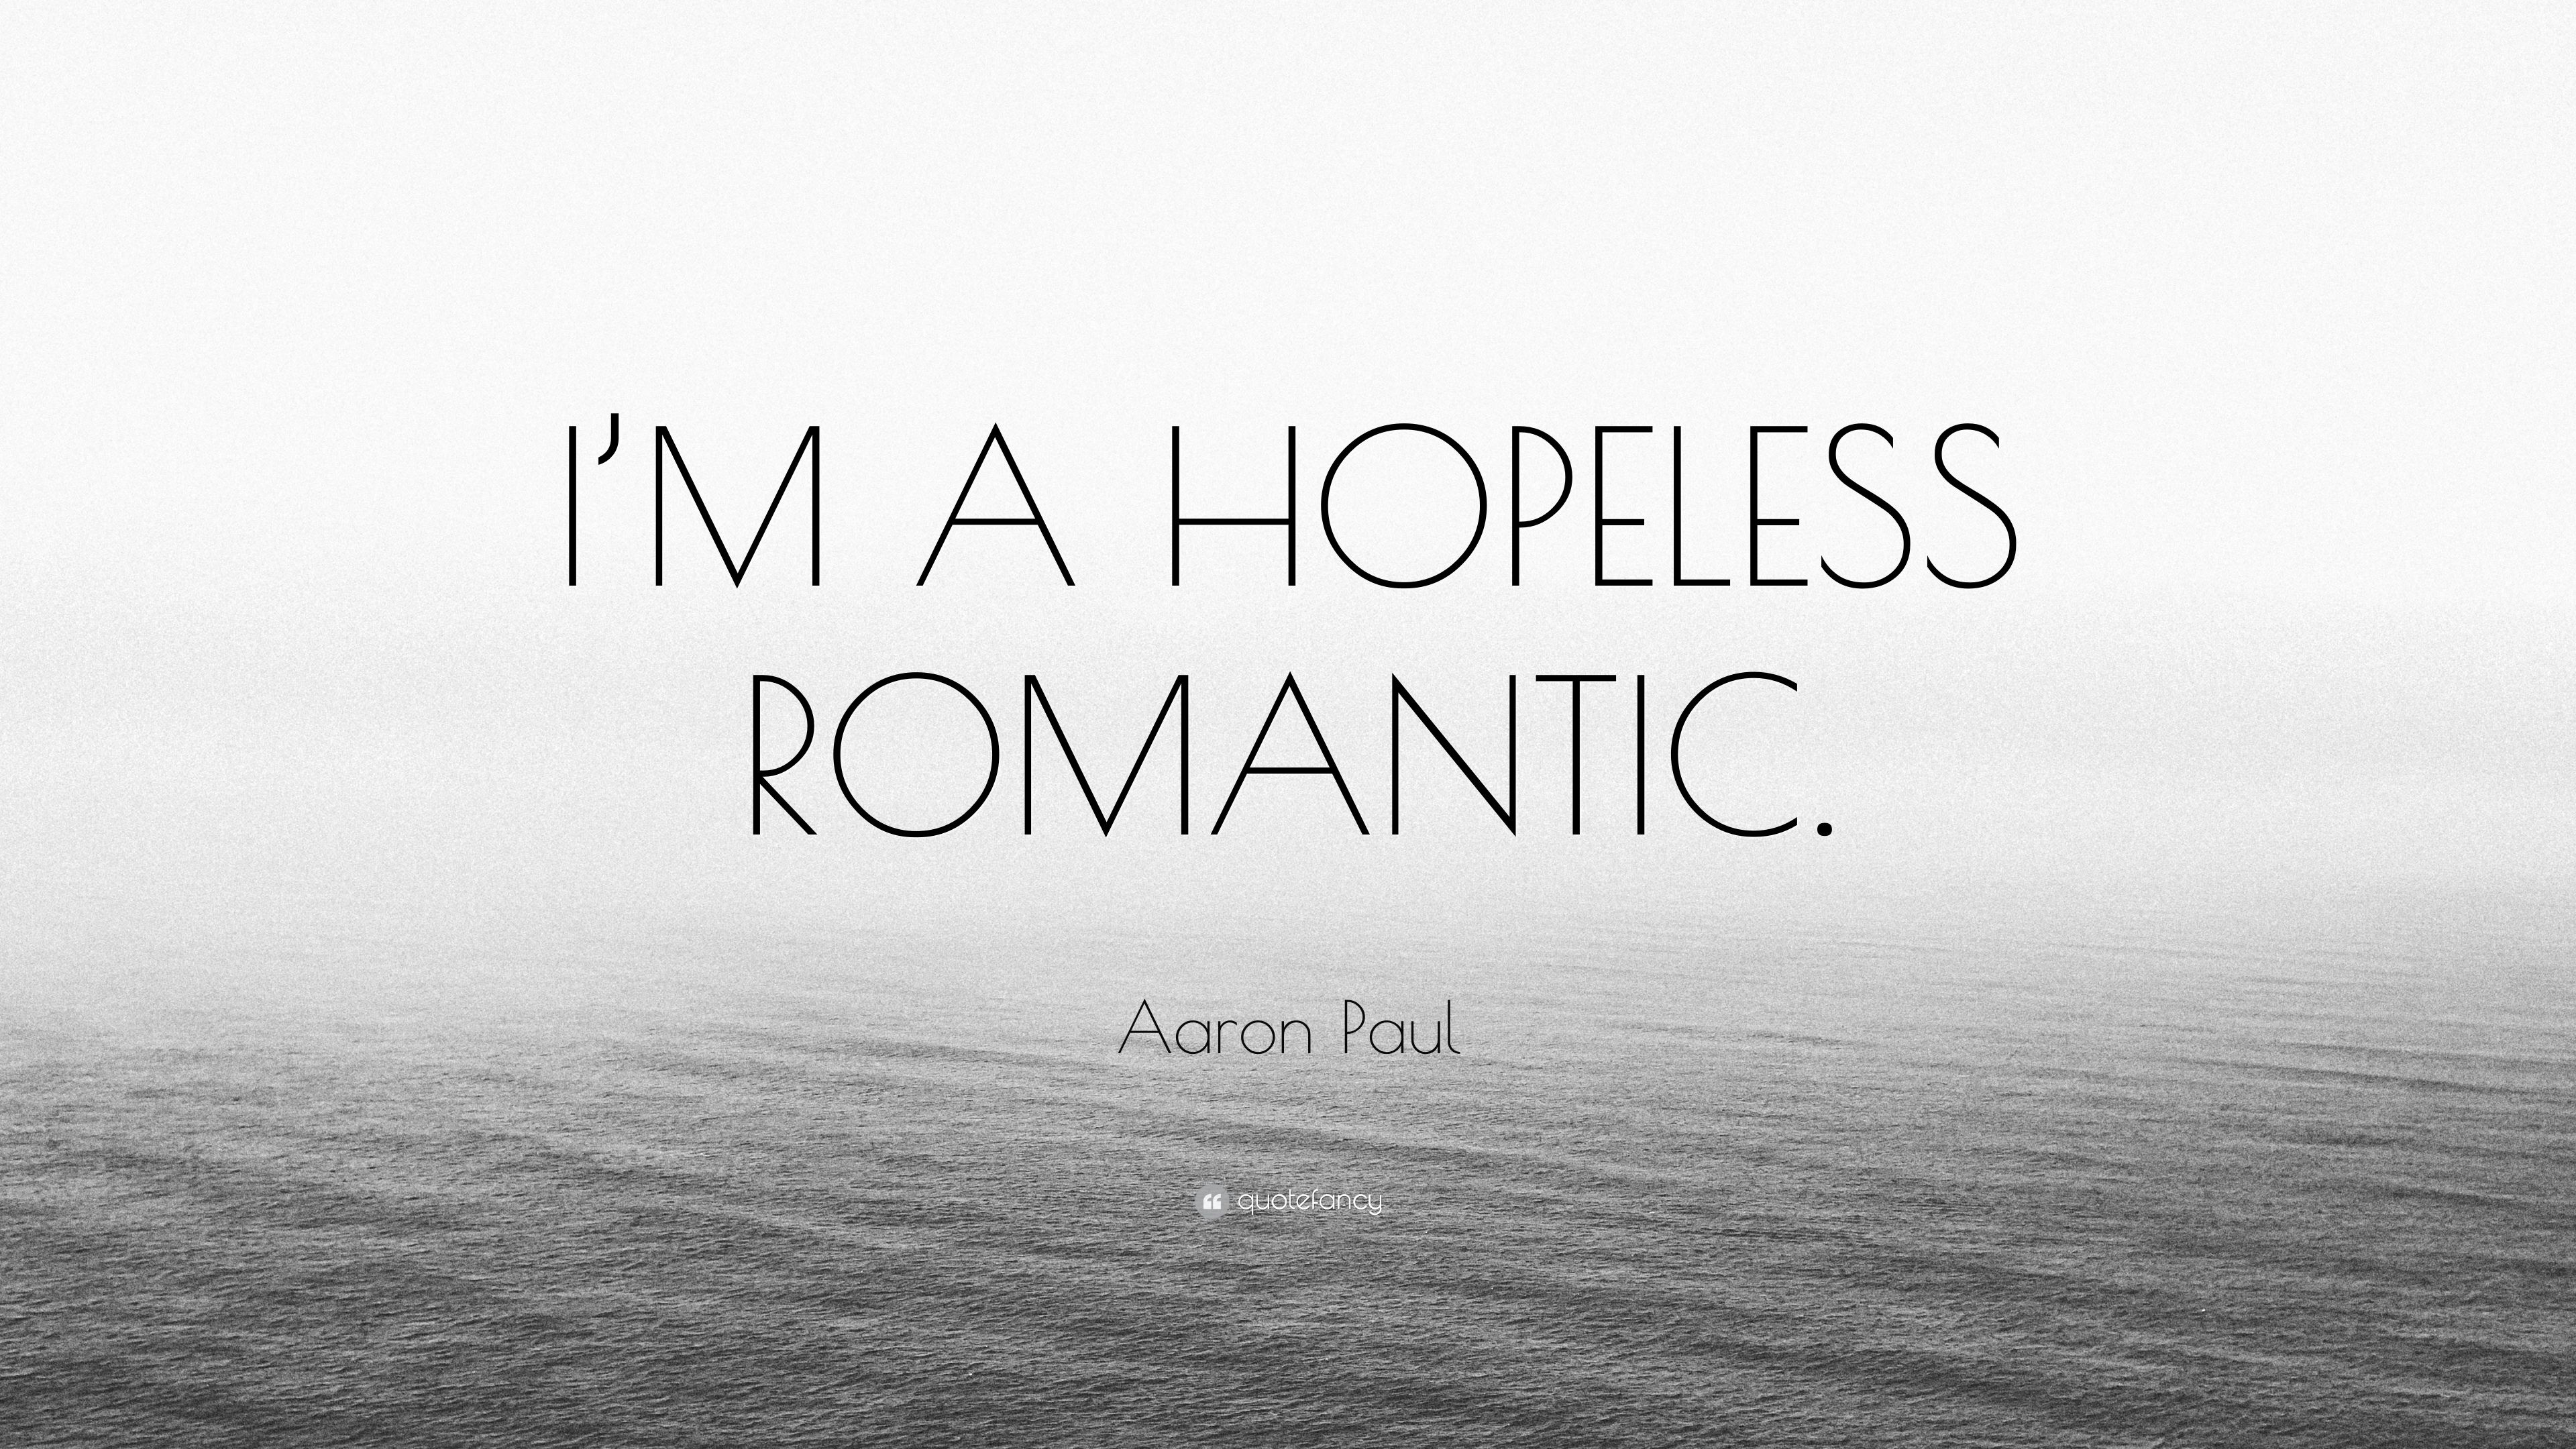 Aaron Paul Quote: “I'M A HOPELESS ROMANTIC.”